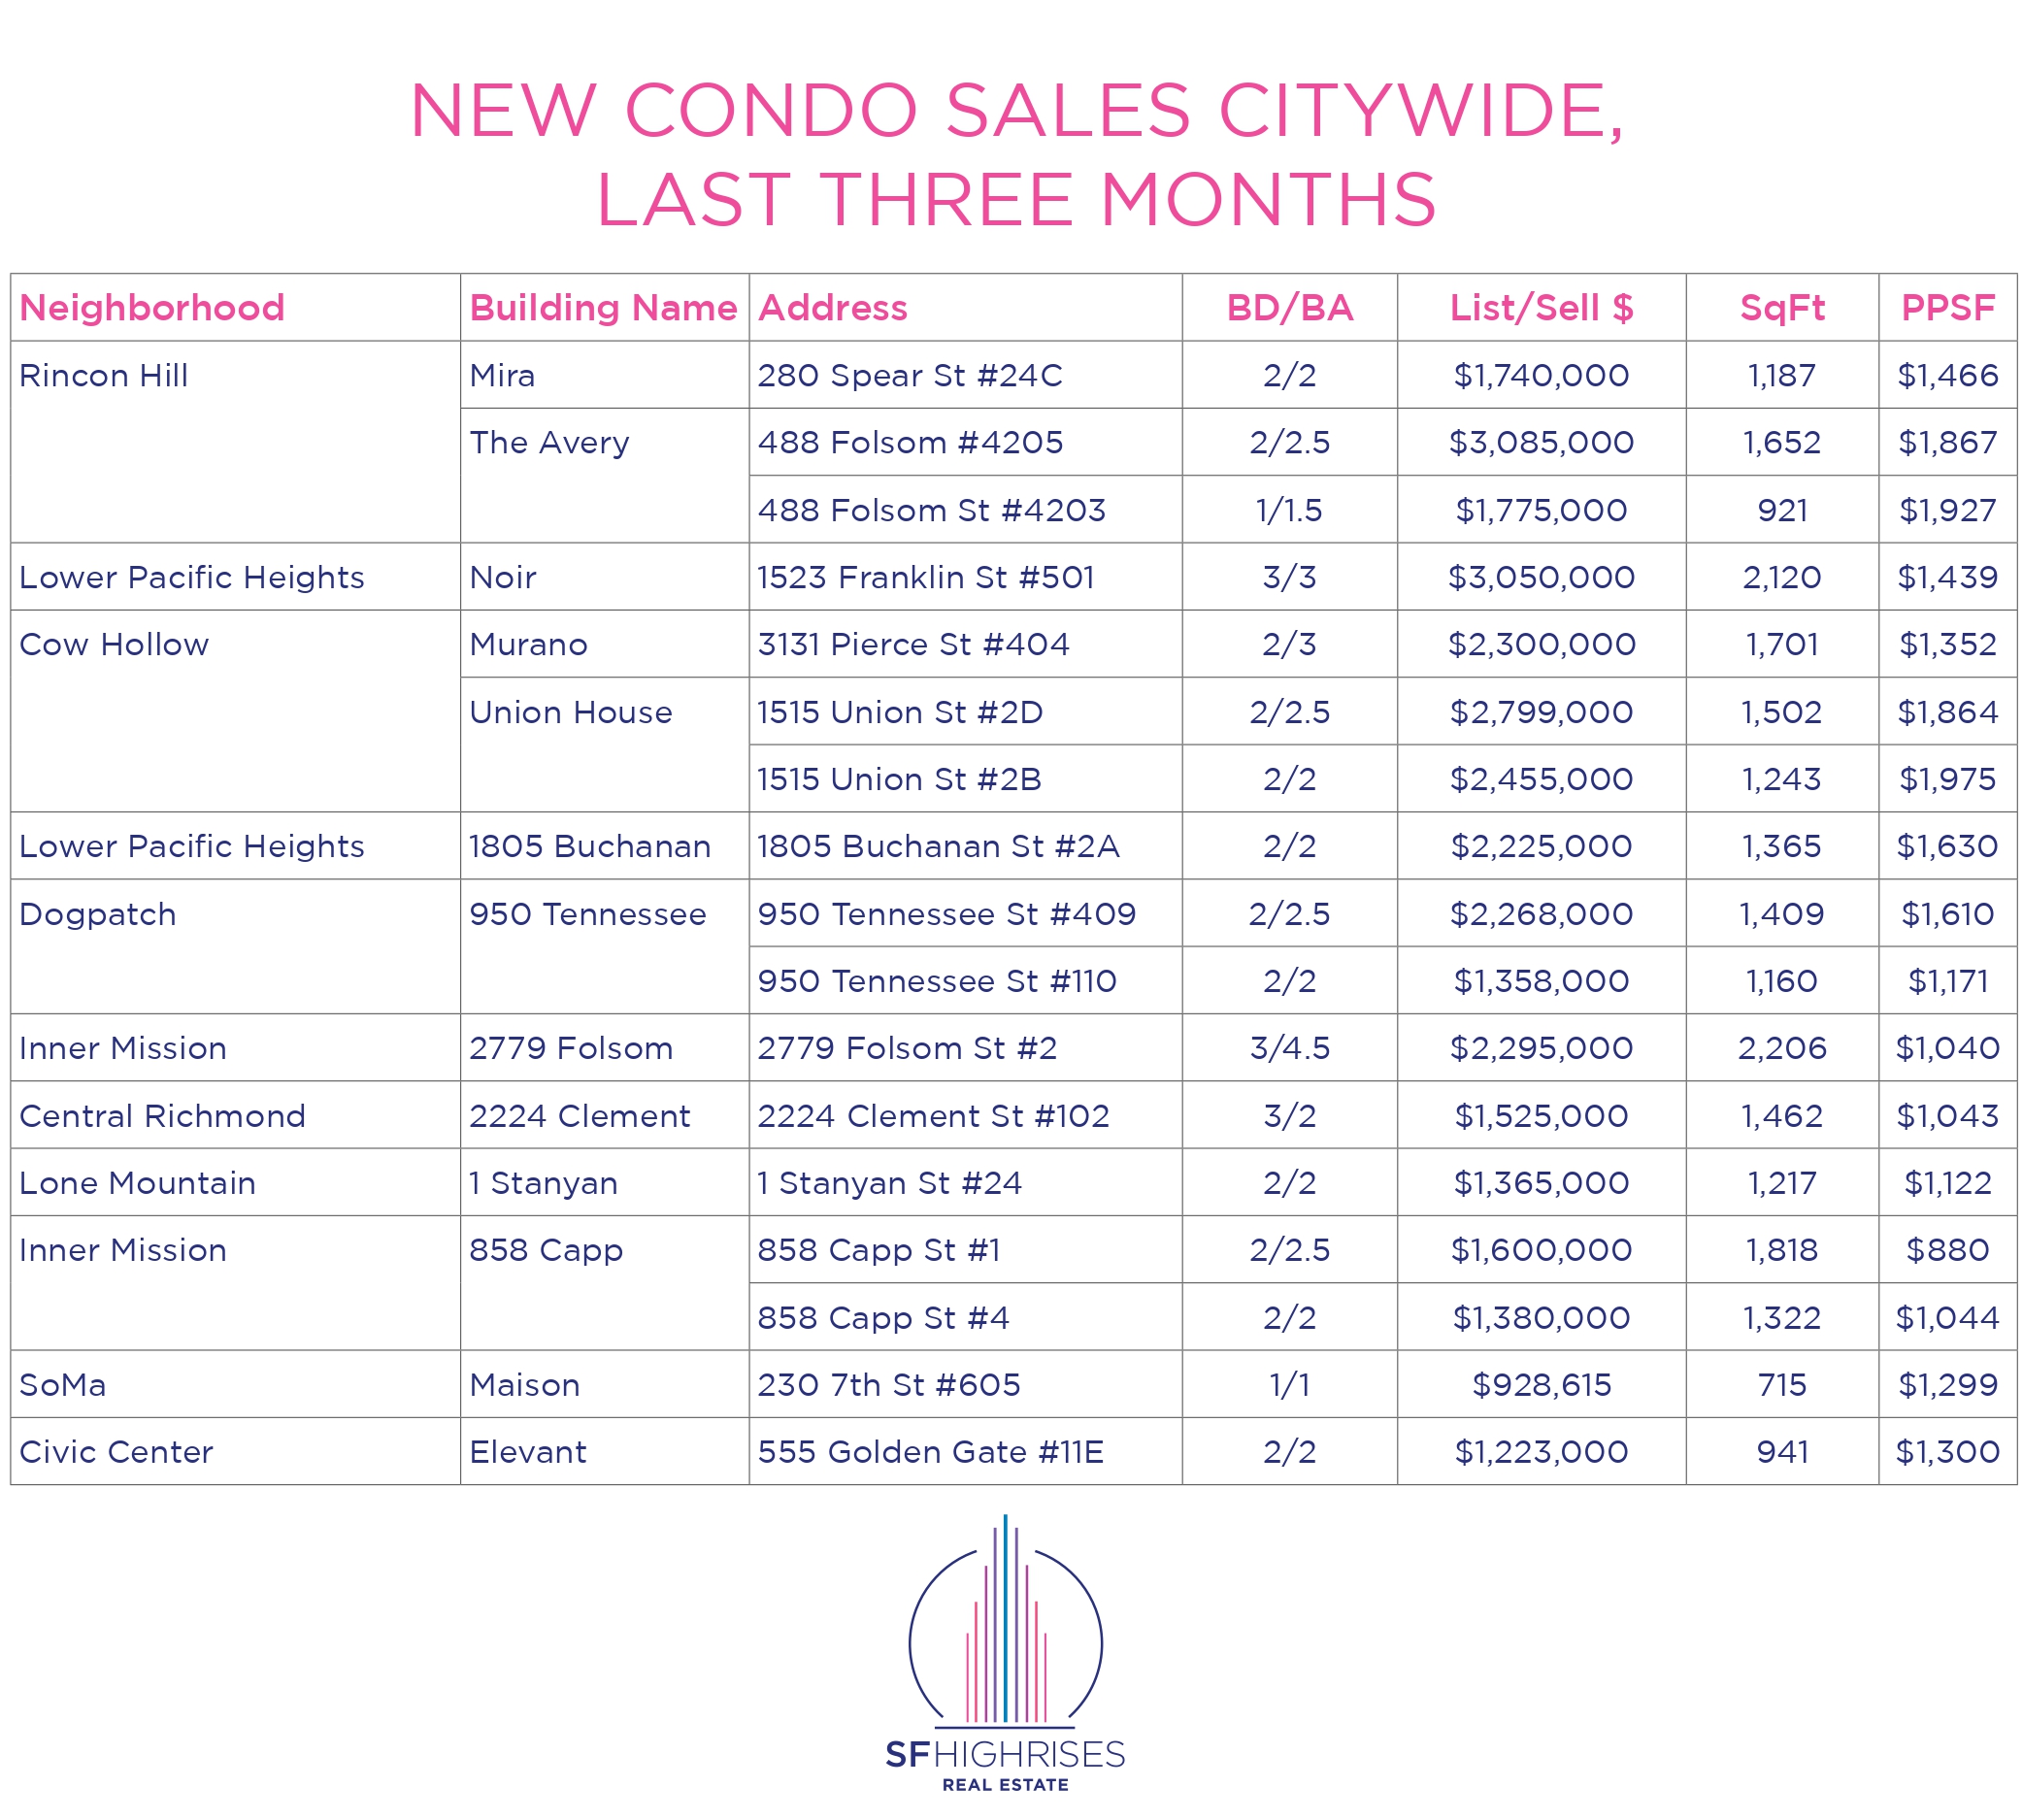 New condo sales citywide